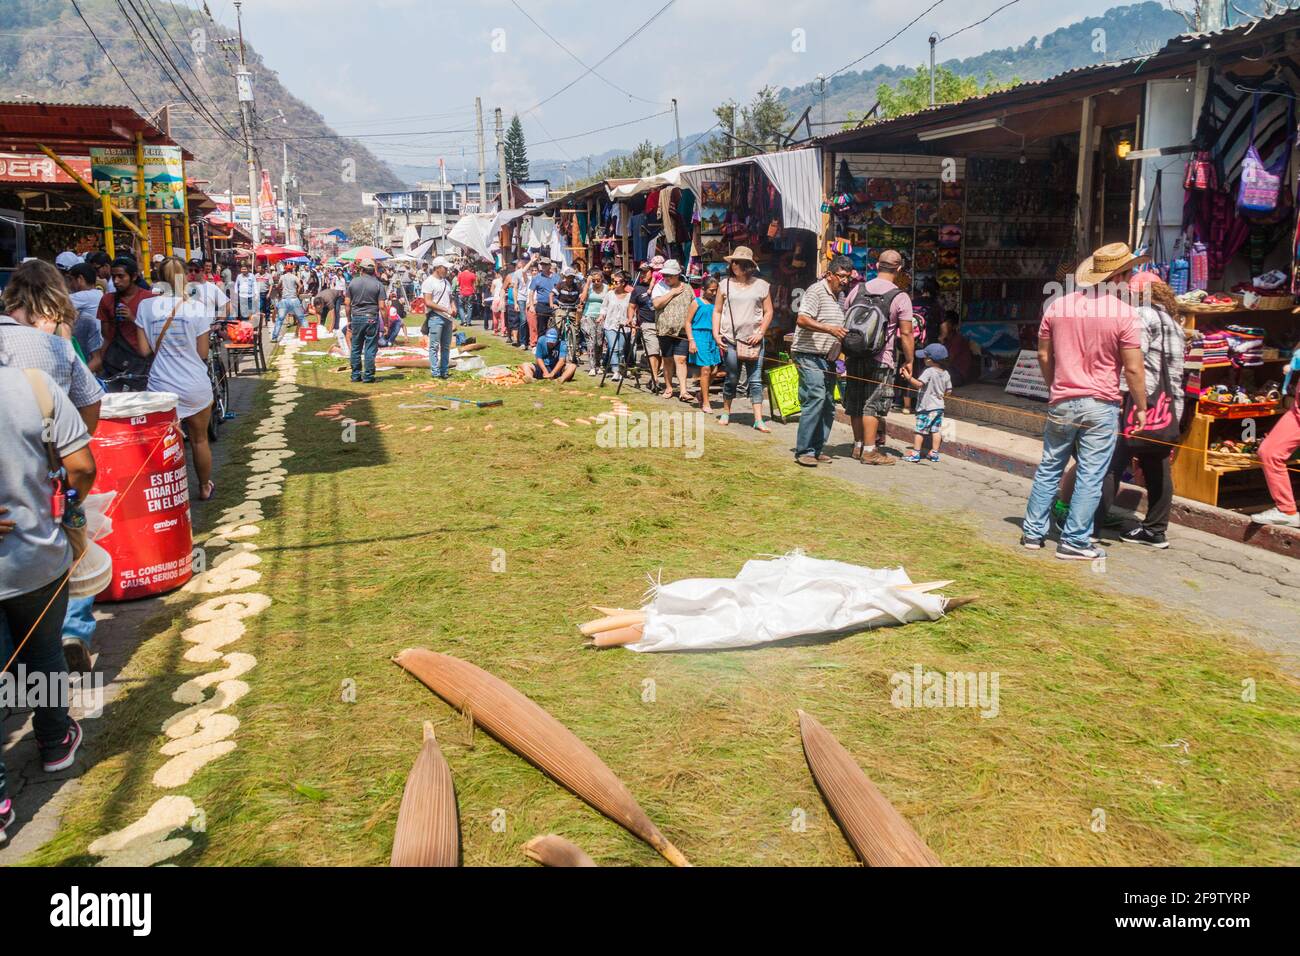 PANAJACHEL, GUATEMALA - 25. MÄRZ 2016: Menschen schmücken Osterteppiche im Dorf Panajachel, Guatemala Stockfoto